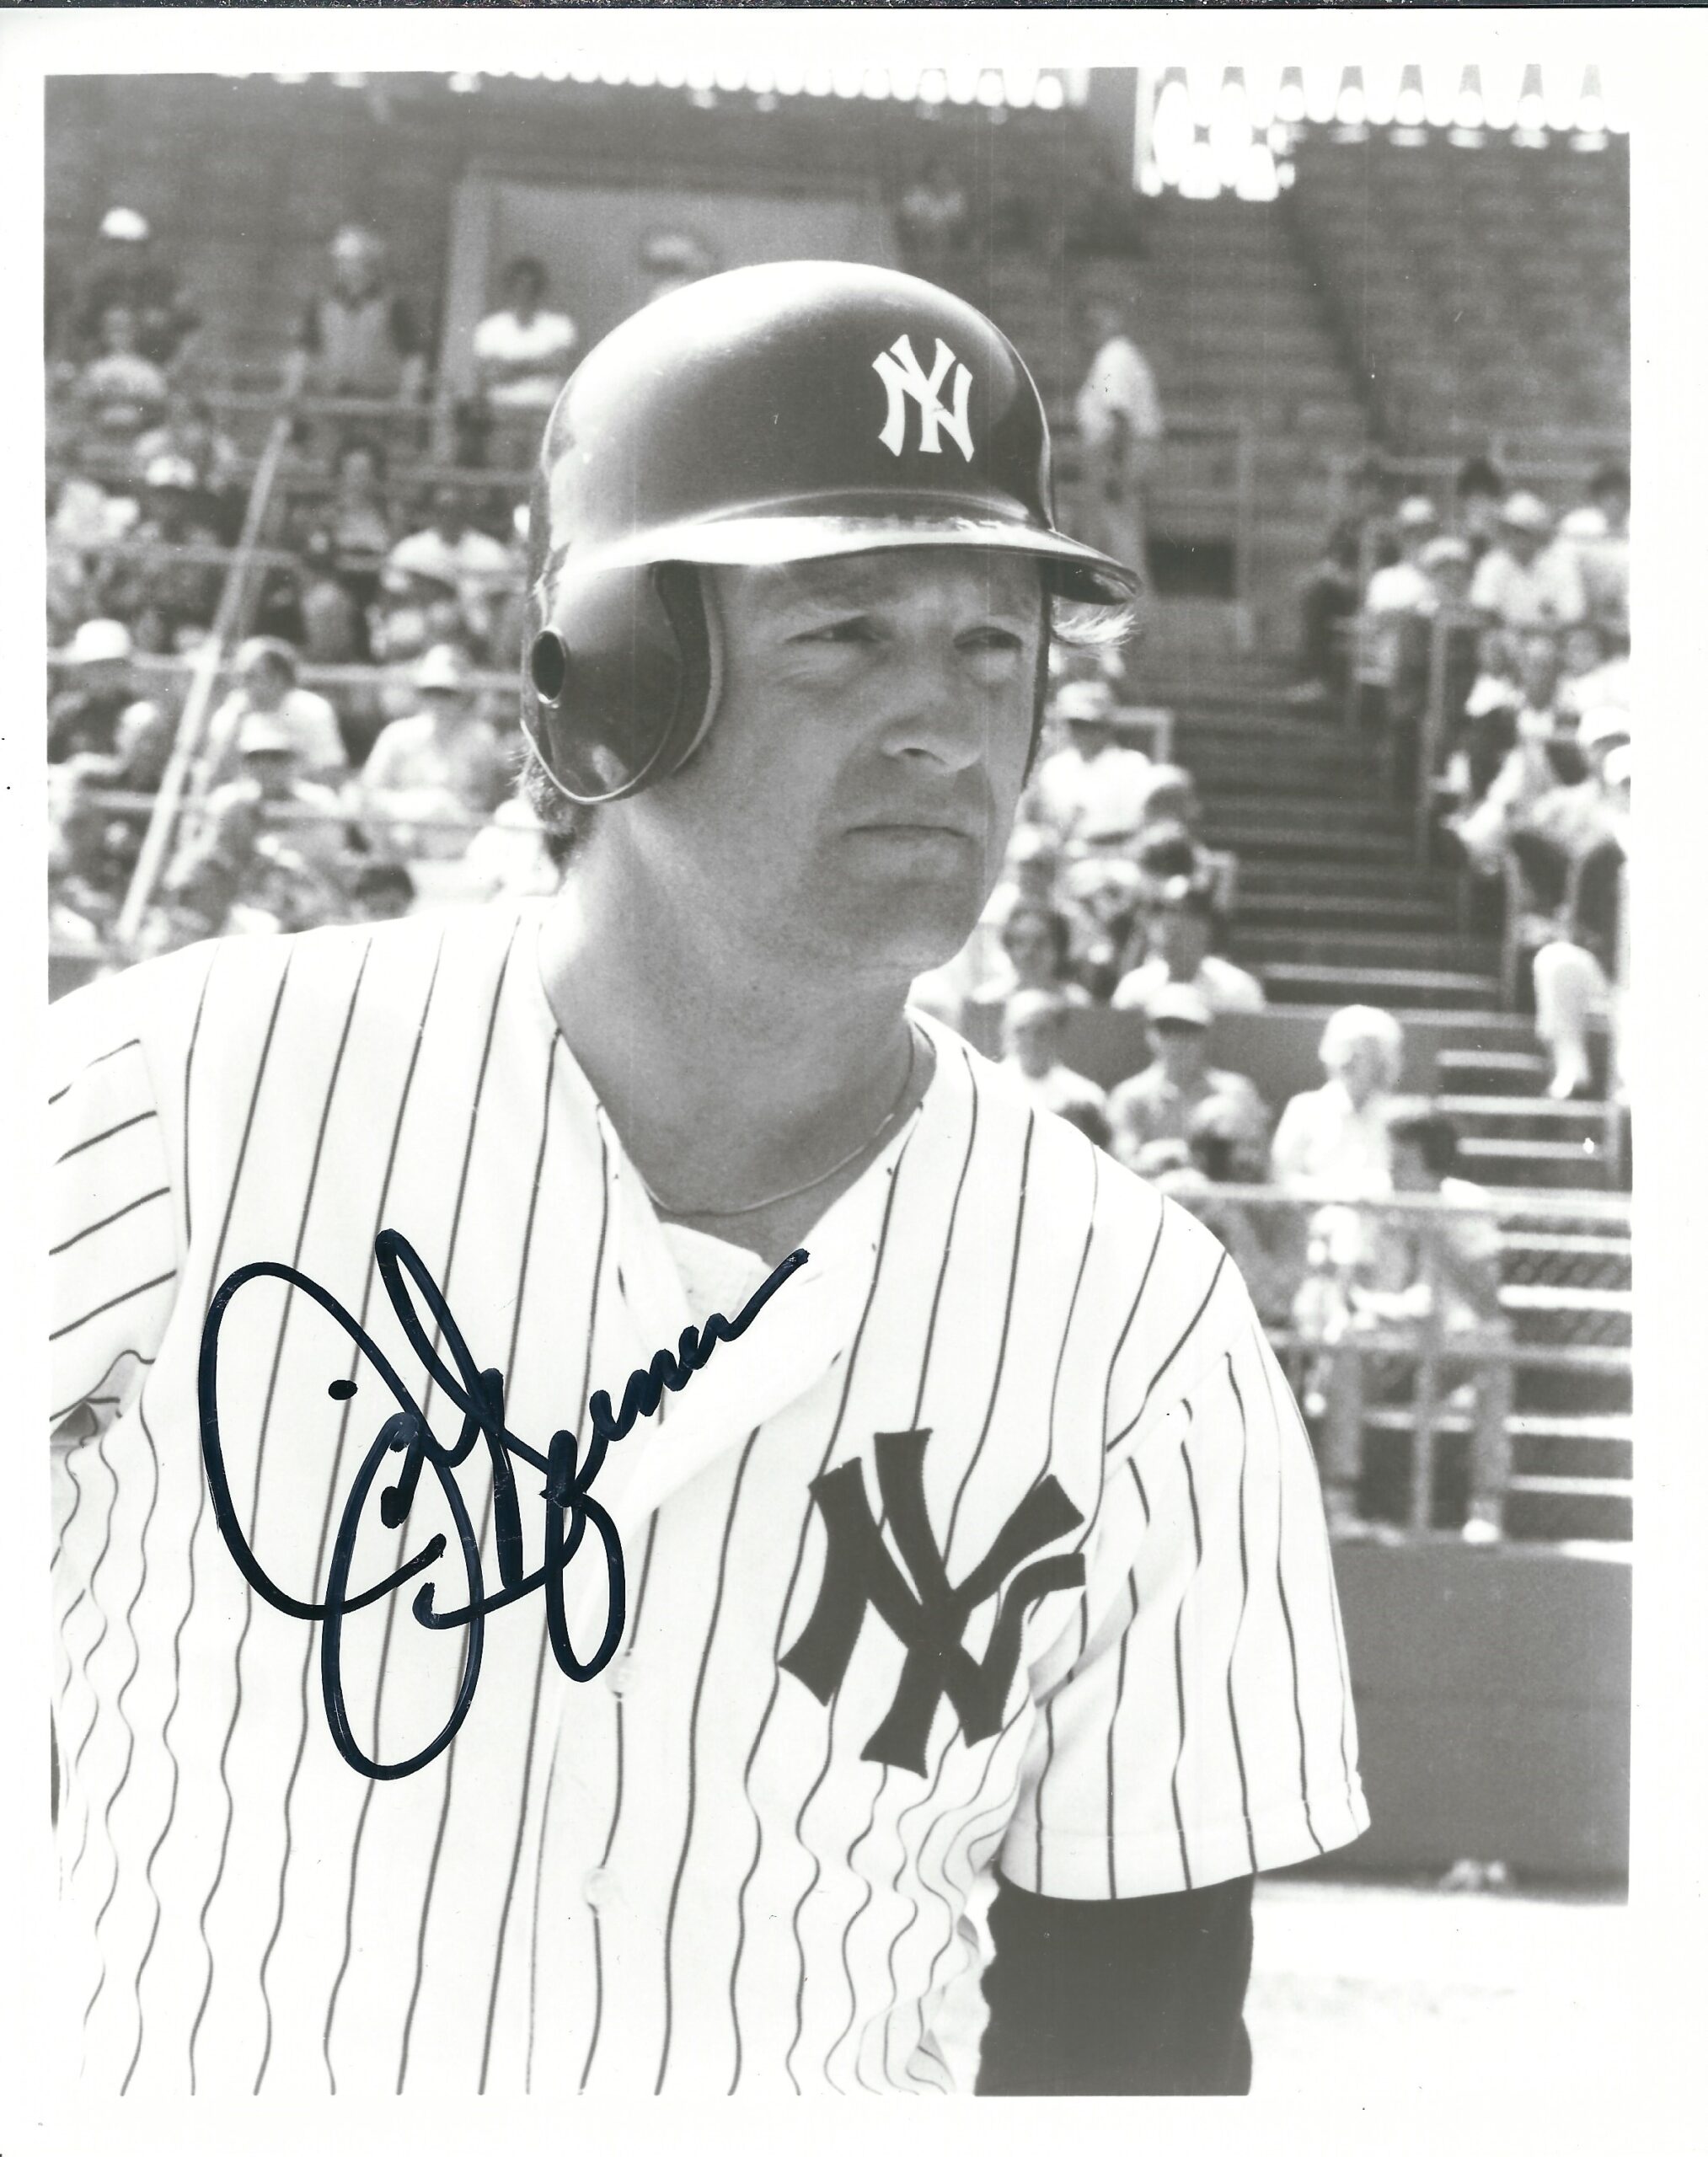 Baseball Card autogaphed by Reggie Jackson, New York Yankees